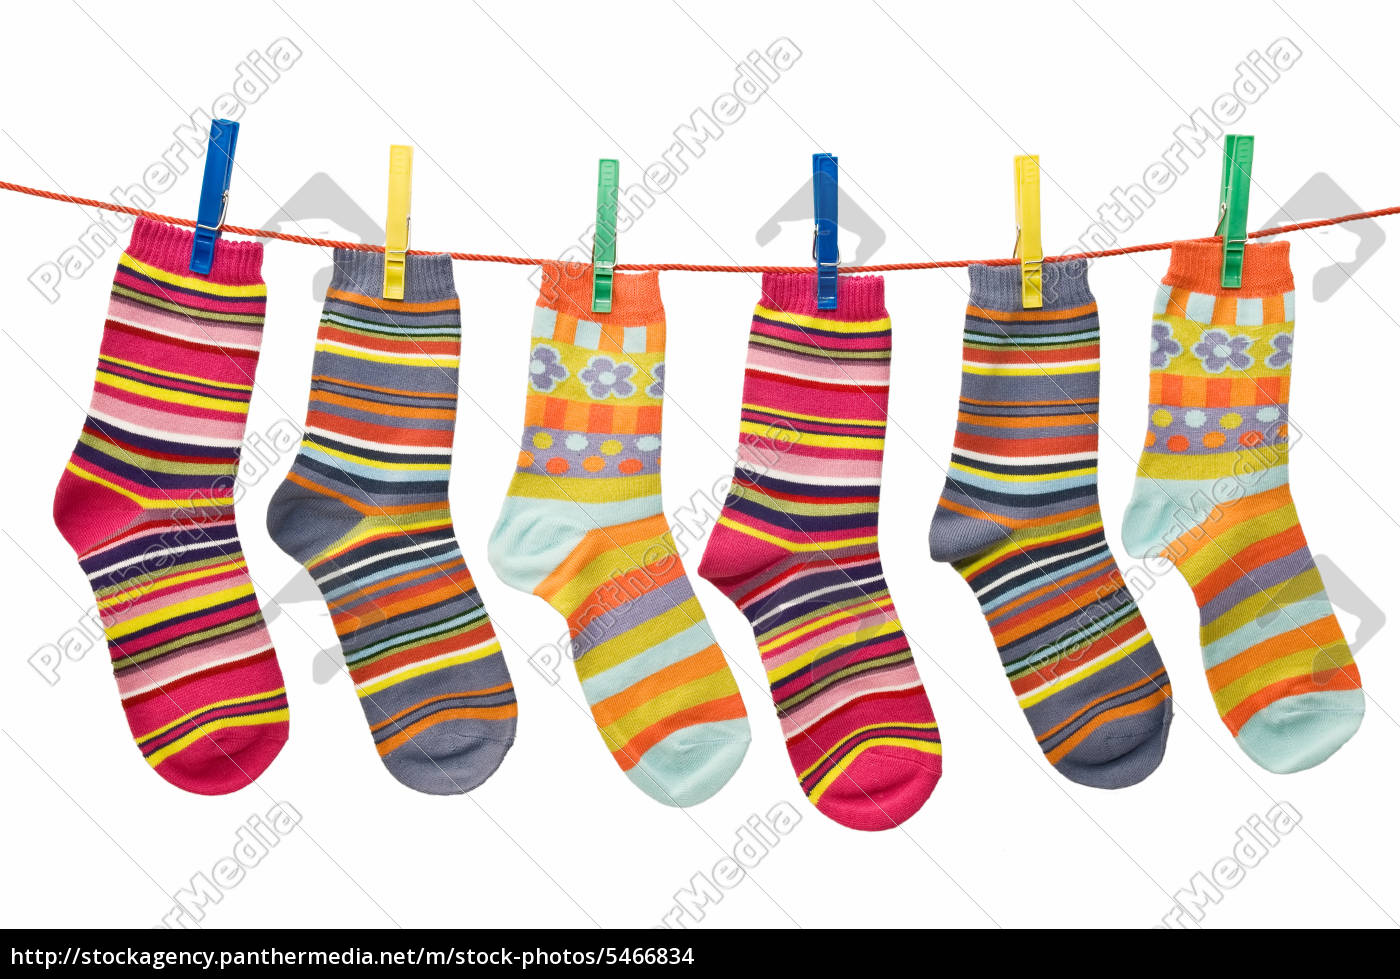 calcetines en el tendedero - Stockphoto #5466834